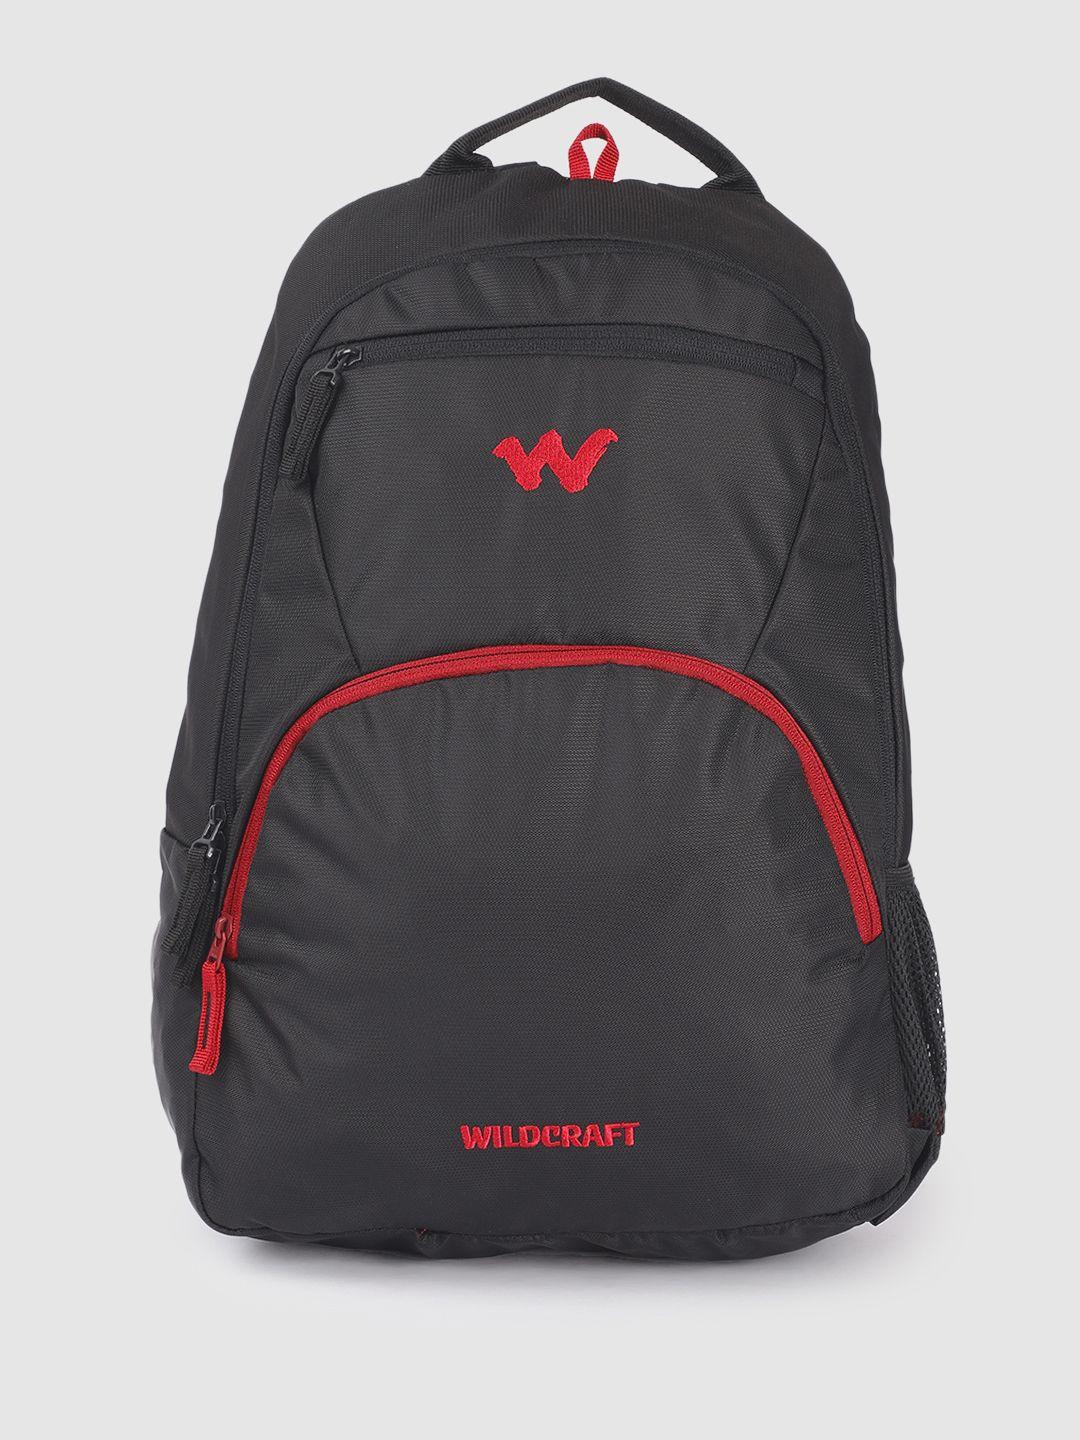 wildcraft unisex brand logo minimal embroidered backpack